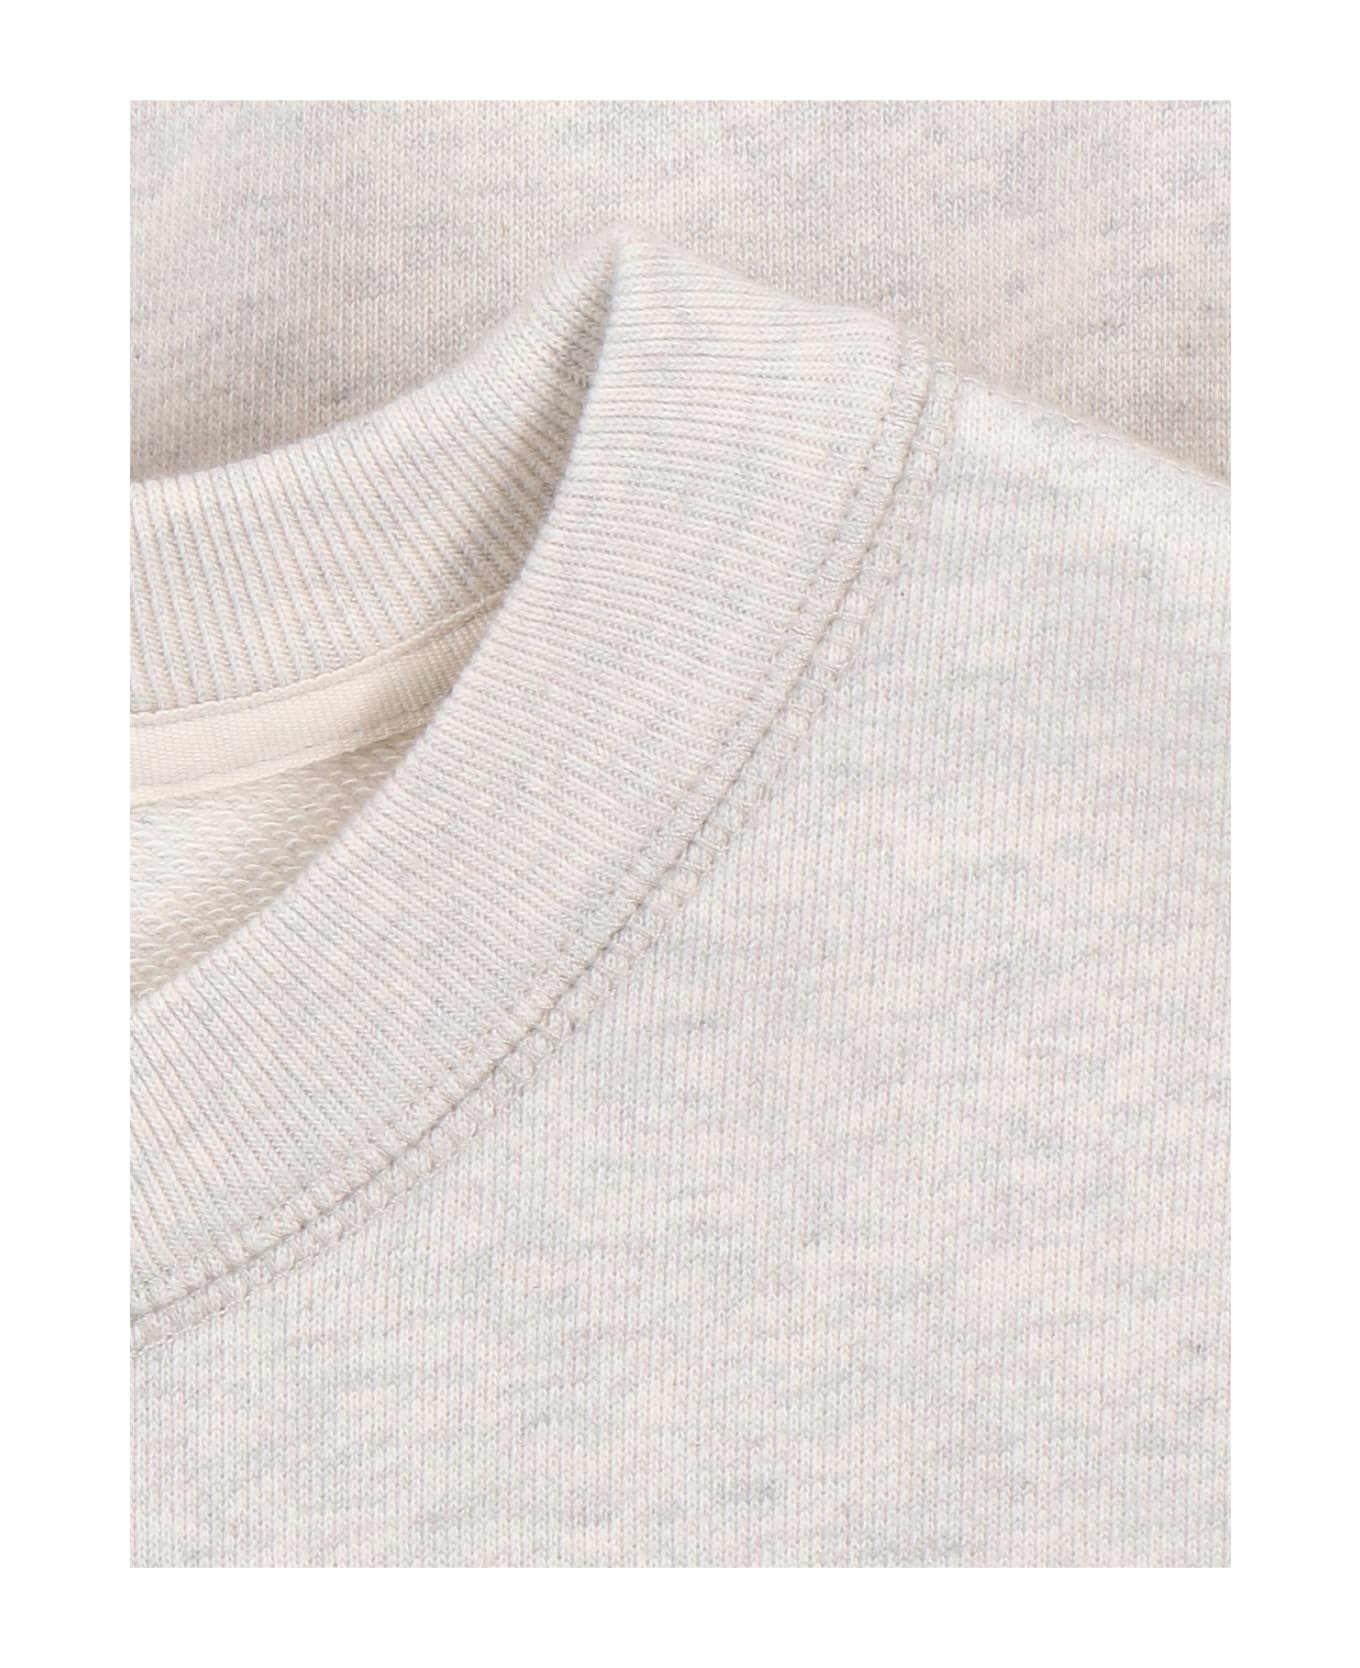 Marant Étoile Mikoy Logo Cotton Sweatshirt - Cream フリース